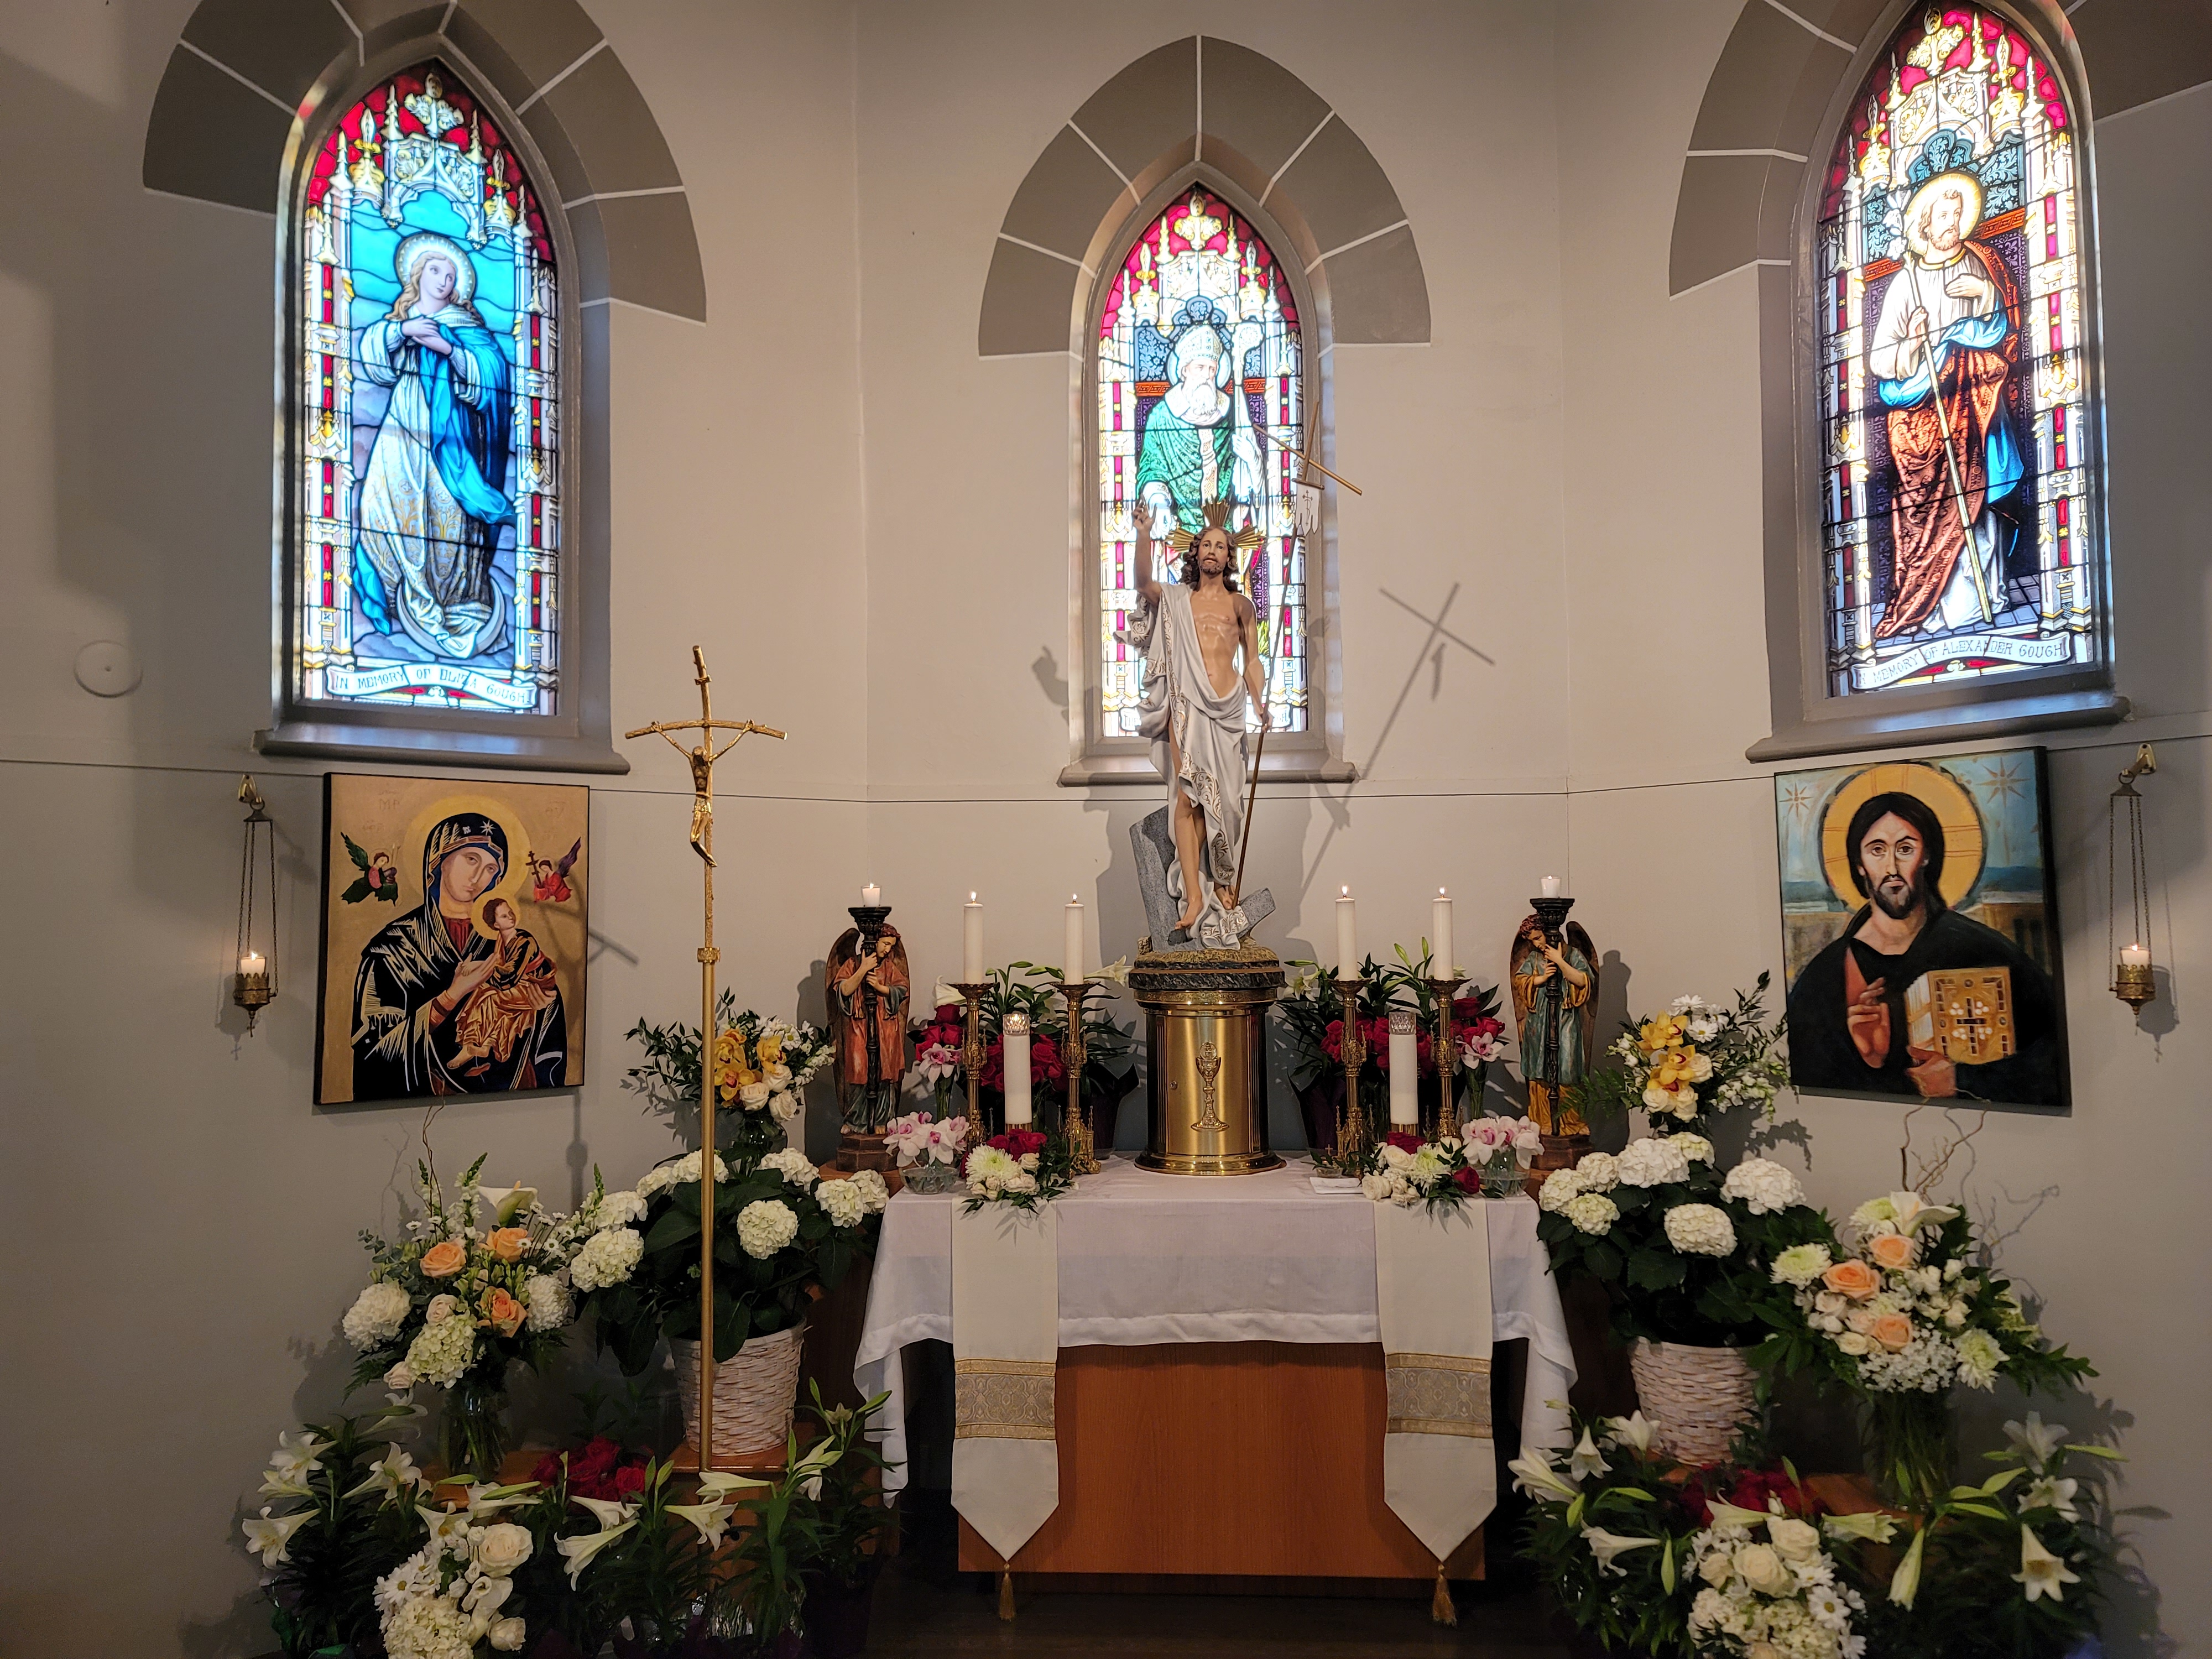 Sanctuary on Easter Sunday